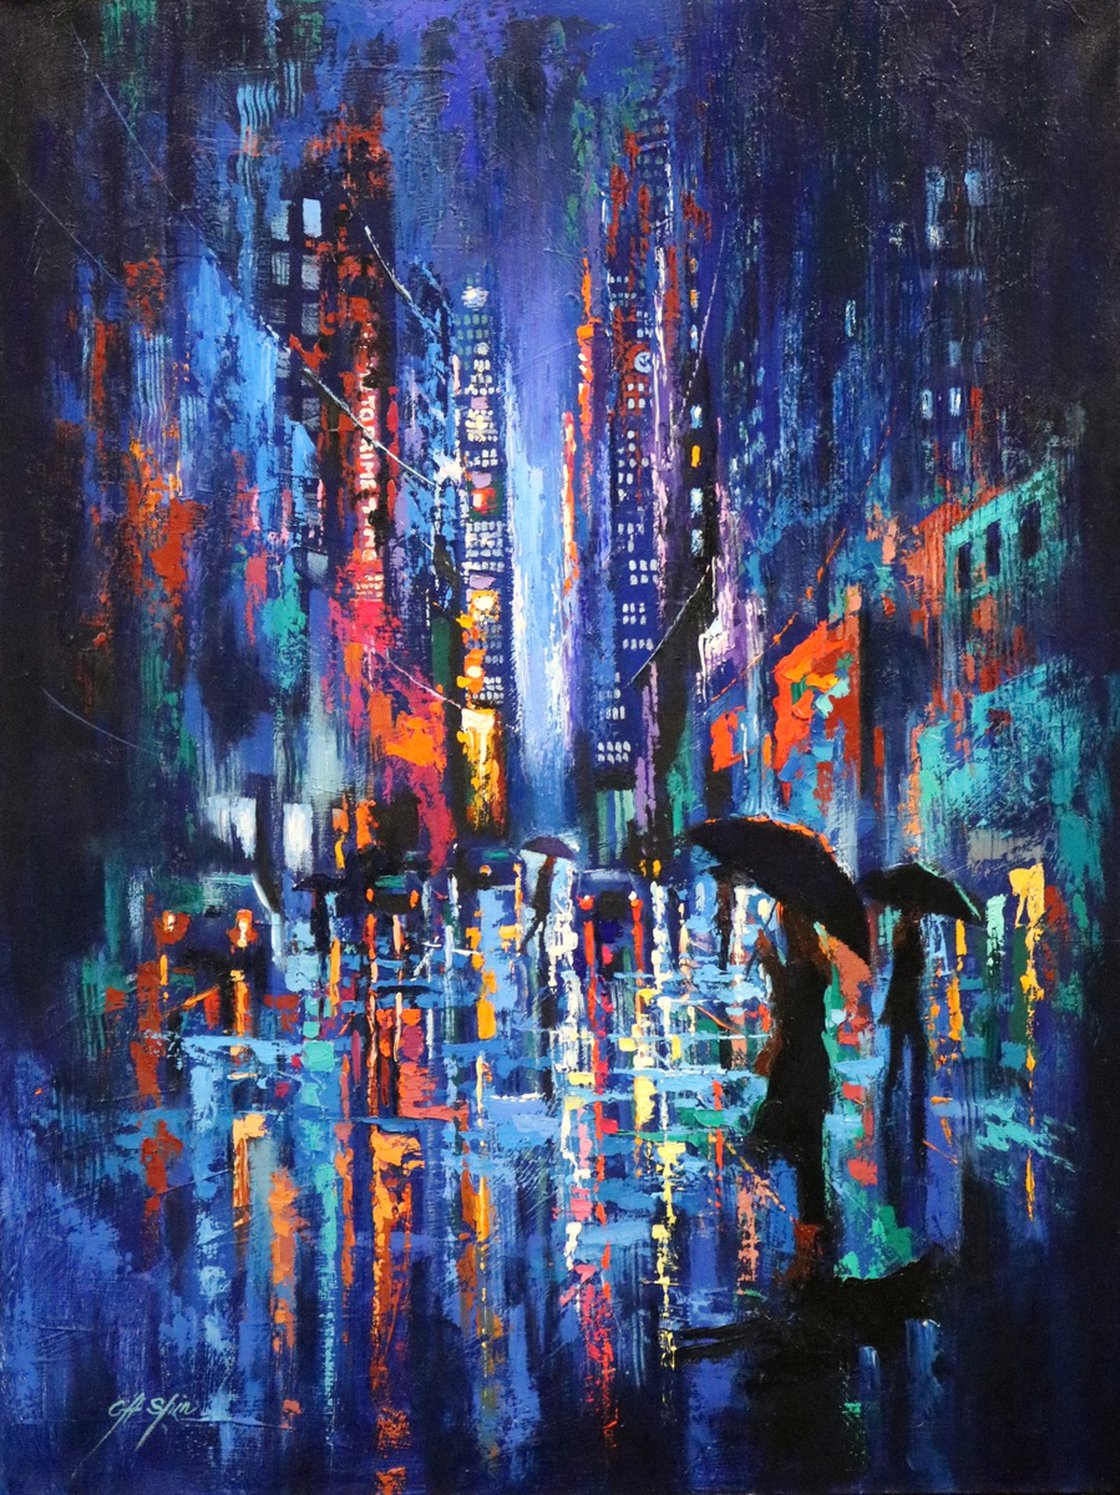 BLUE RAIN Oil painting by Chin H Shin | Artfinder